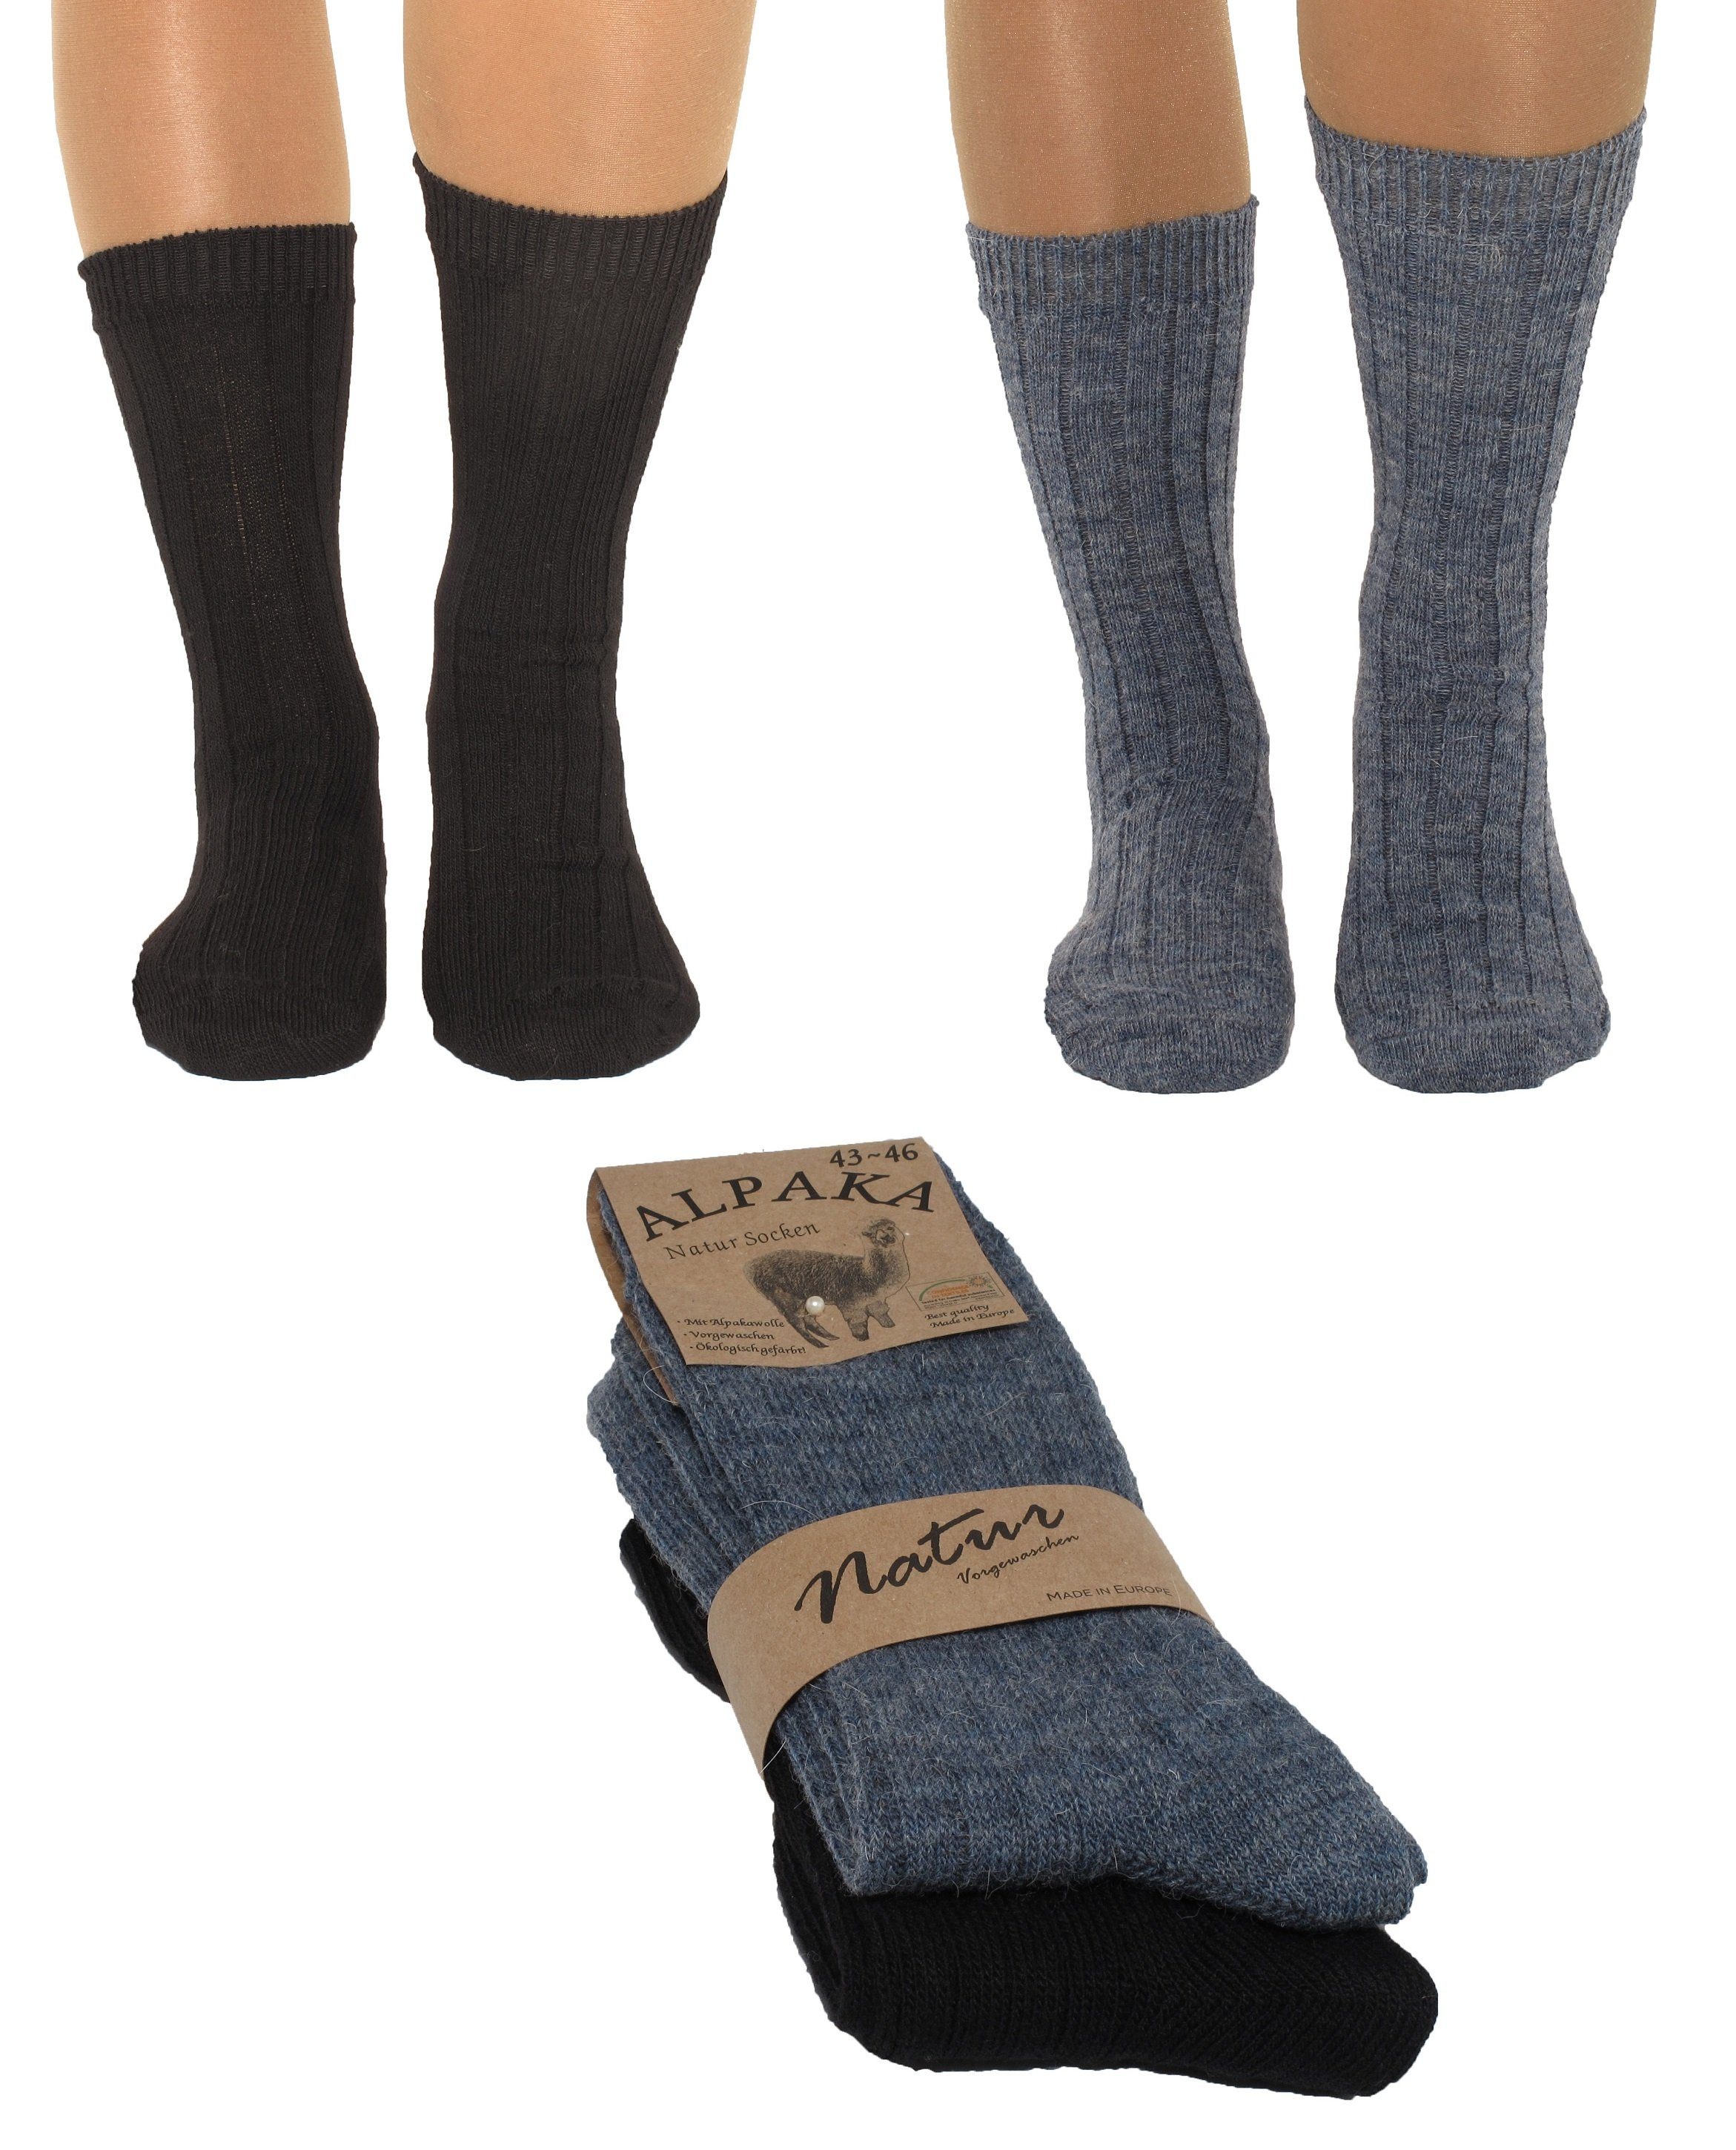 Markenwarenshop-Style Socken 2 Paar Alpaka Herren Socken Schafswolle Dünn  gestrickt Strümpfe 43-46